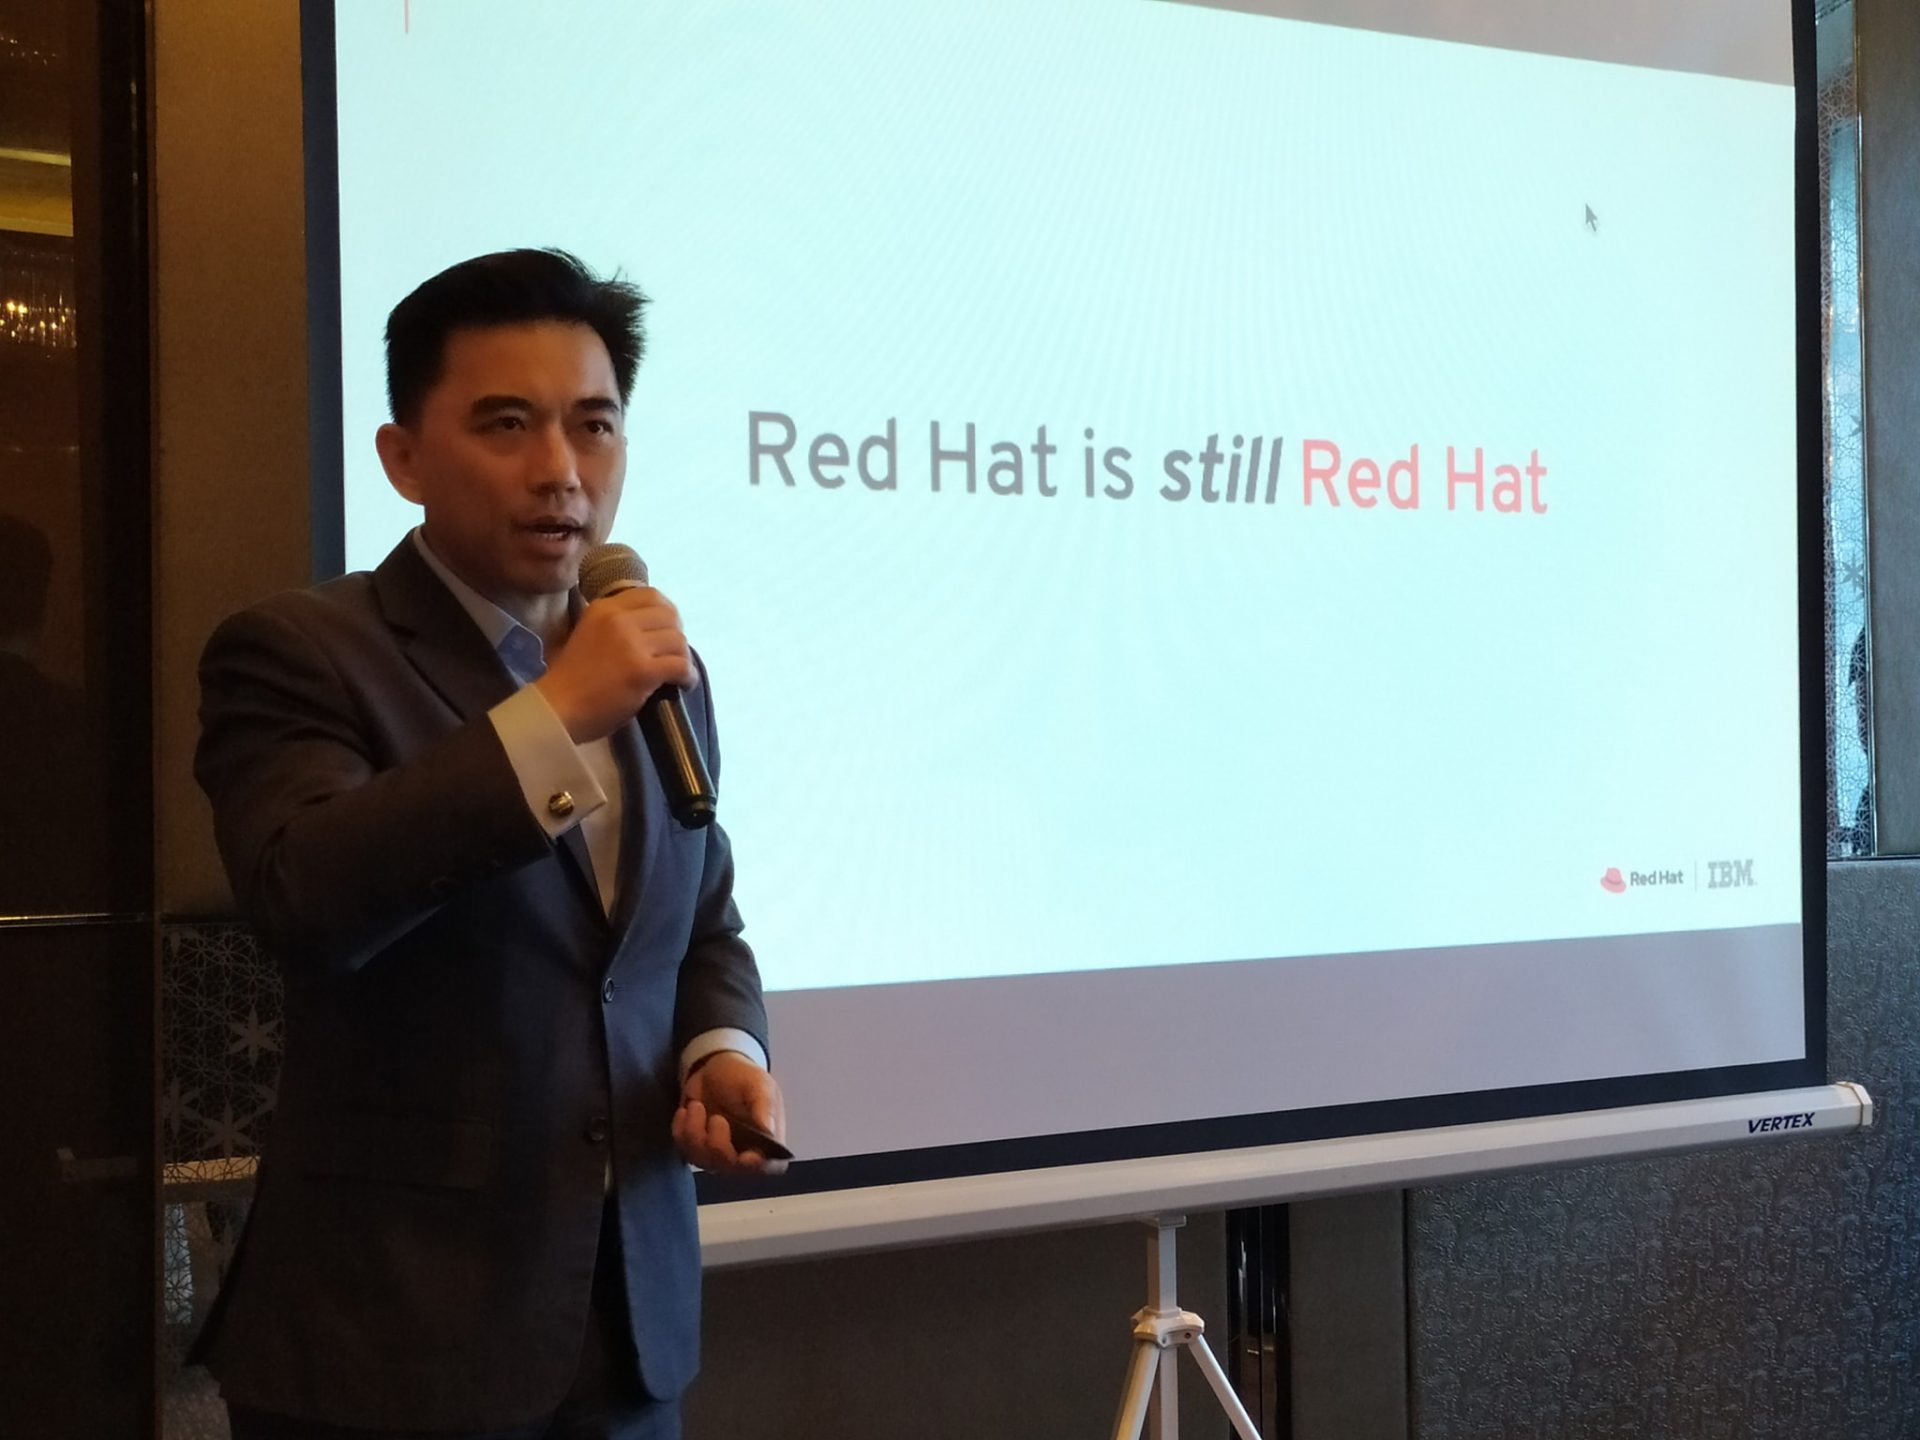 Red Hat โชว์โซลูชัน Enterprise linux และ Open Hybrid Cloud พร้อมสร้างความมั่นใจ หลังควบรวมกับไอบีเอ็ม